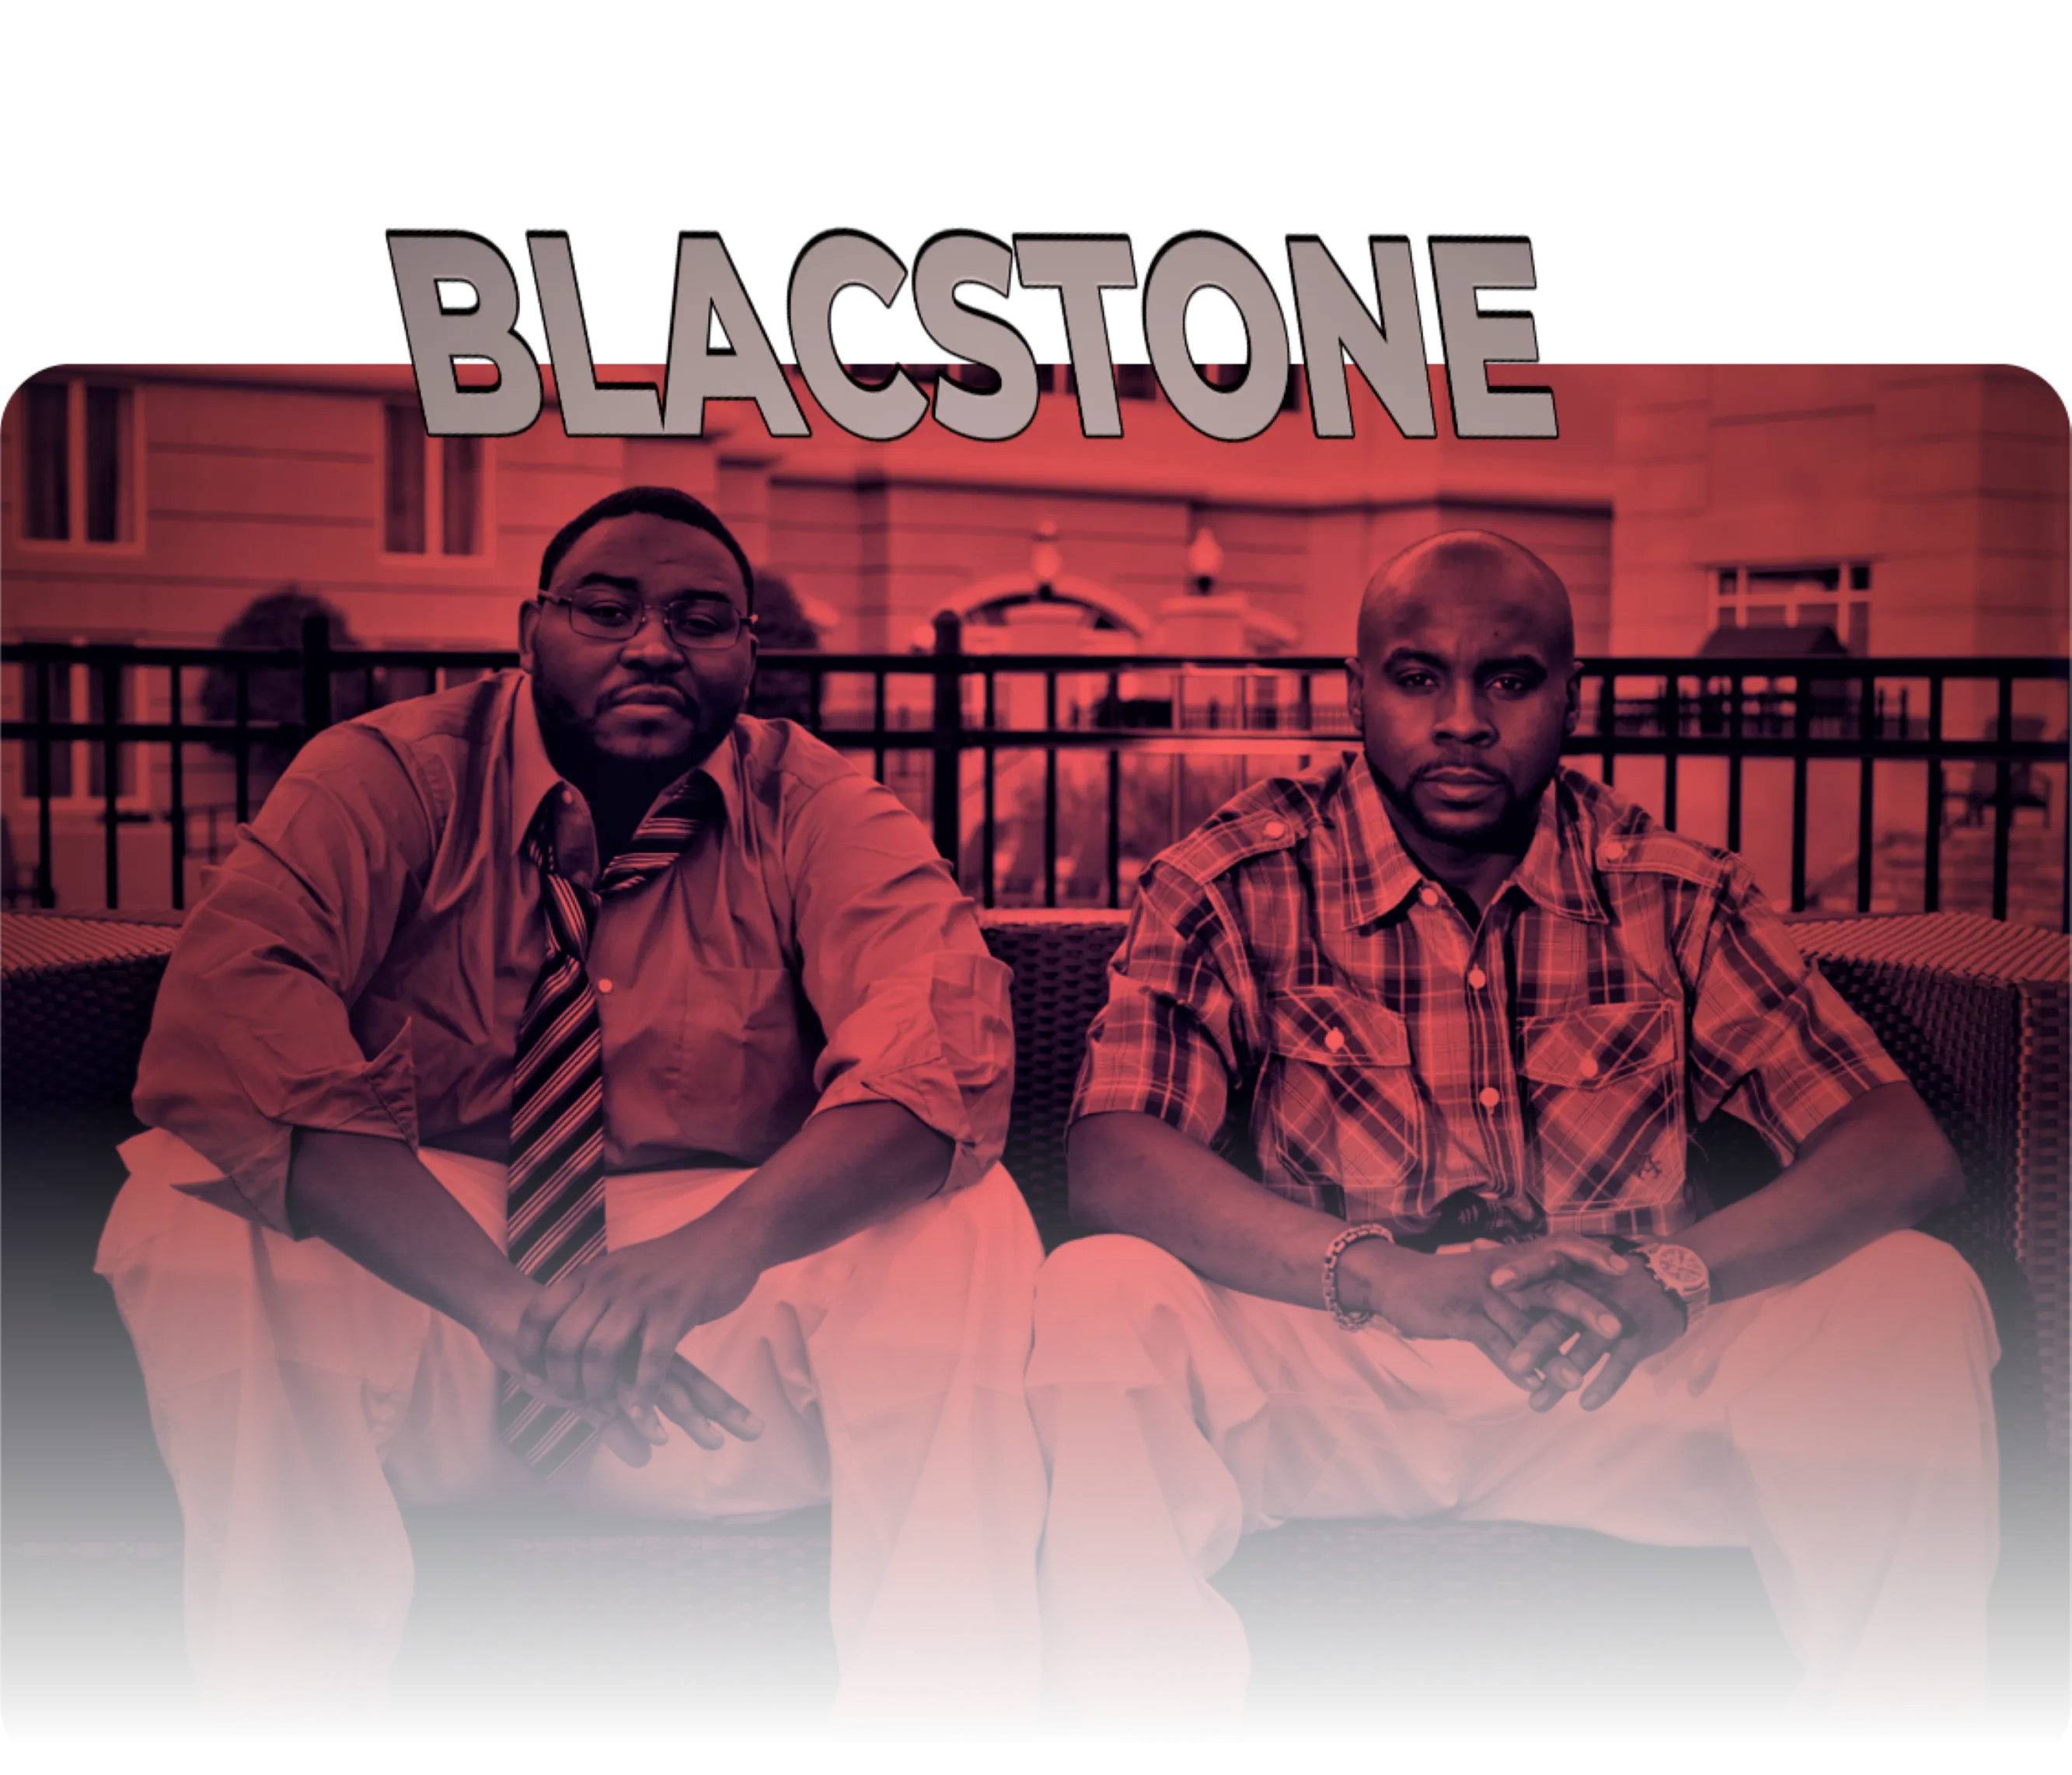 Blacstone Musical group